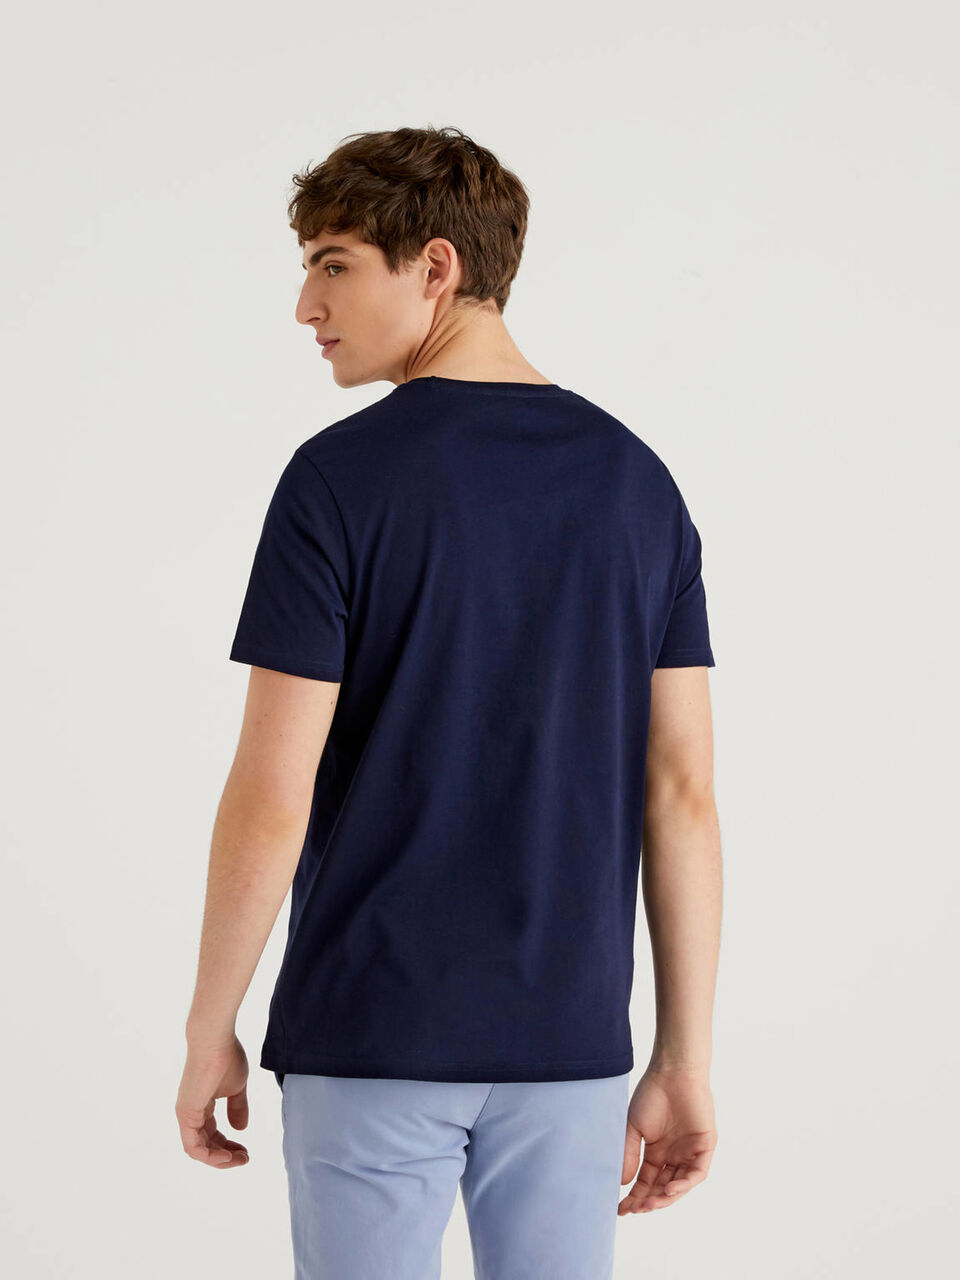 Customizable dark blue t-shirt